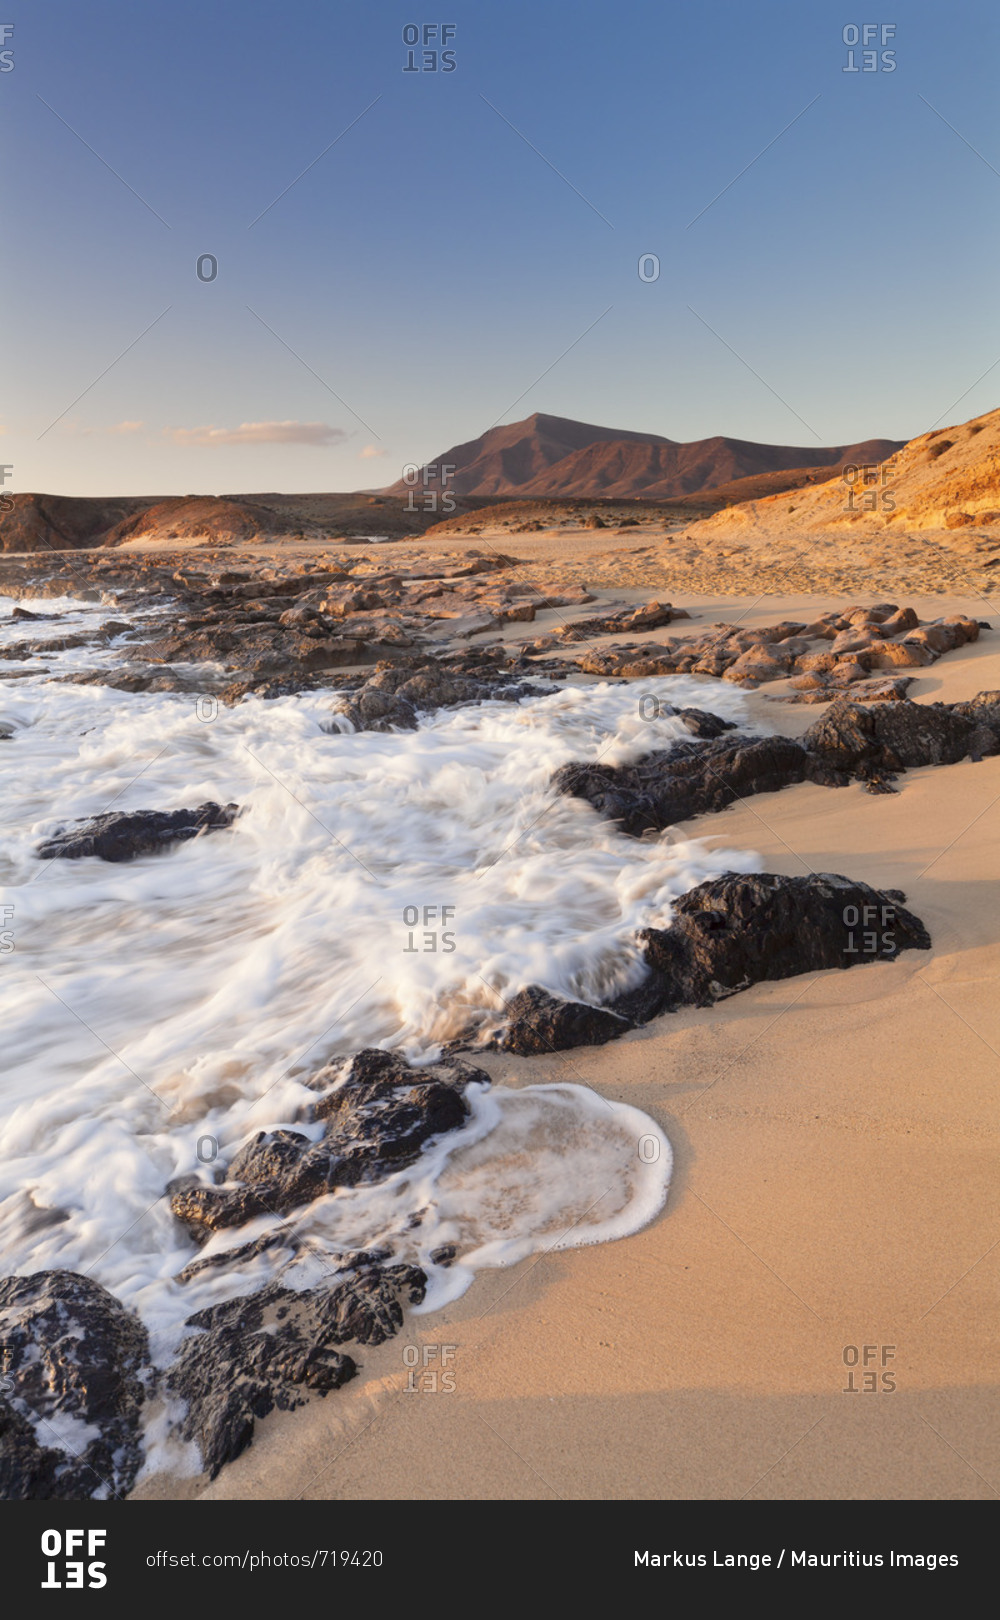 Playa Mujeres at sundown, Papagayo beaches, near Playa Blanca, Lanzarote, Canary islands, Spain